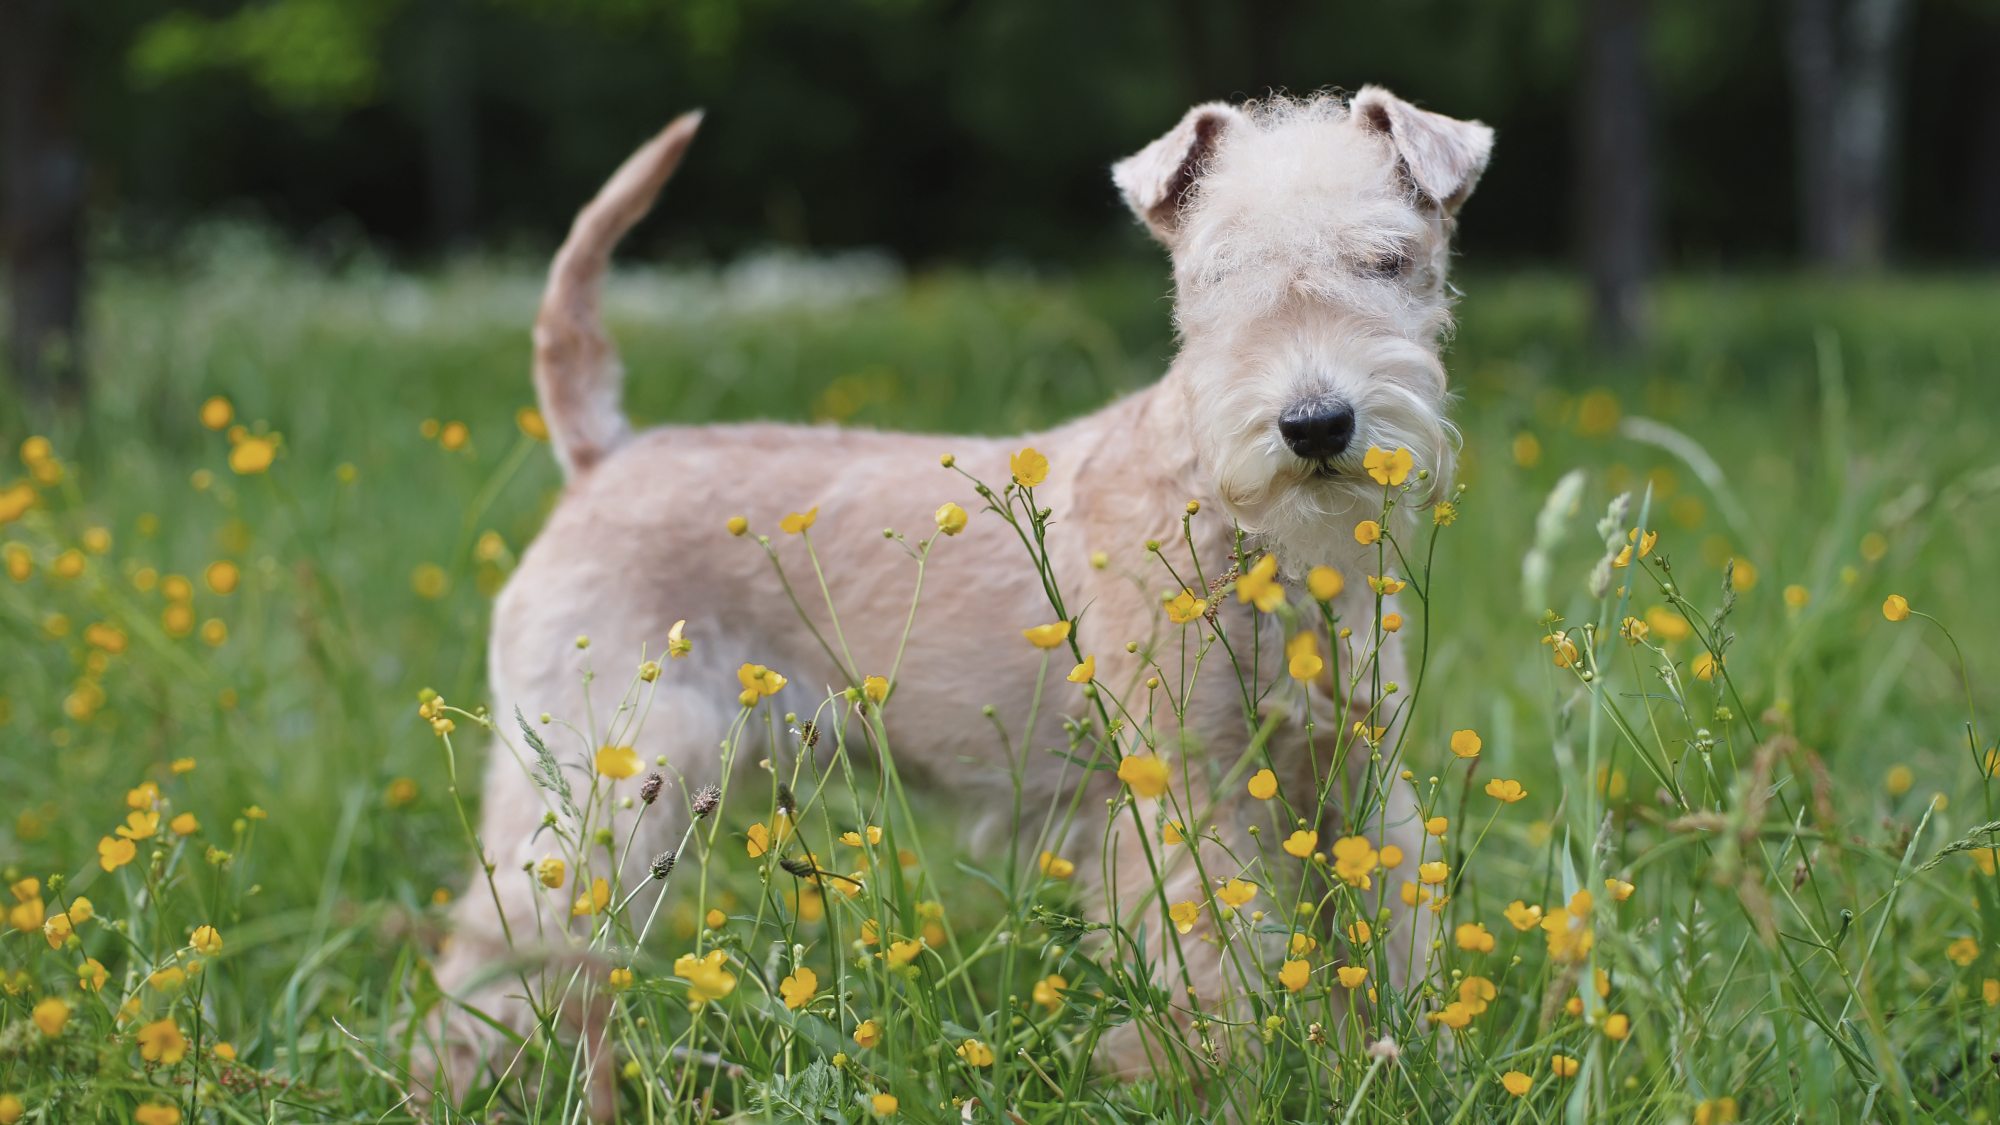 Lakeland Terrier standing amongst yellow flowers